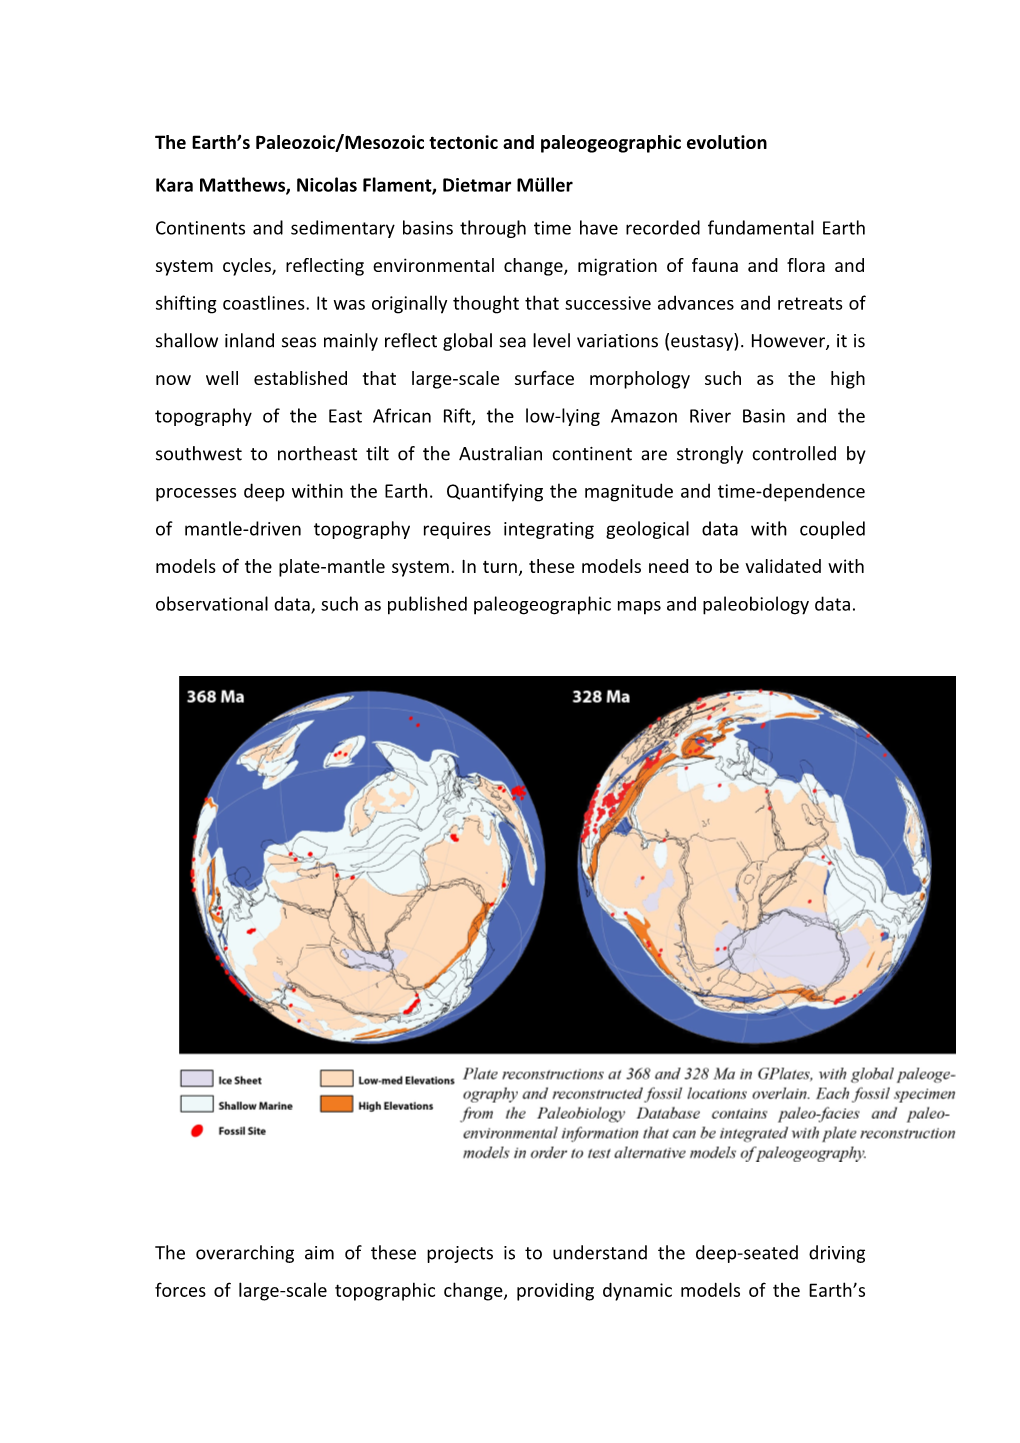 The Earth S Paleozoic/Mesozoic Tectonic and Paleogeographic Evolution